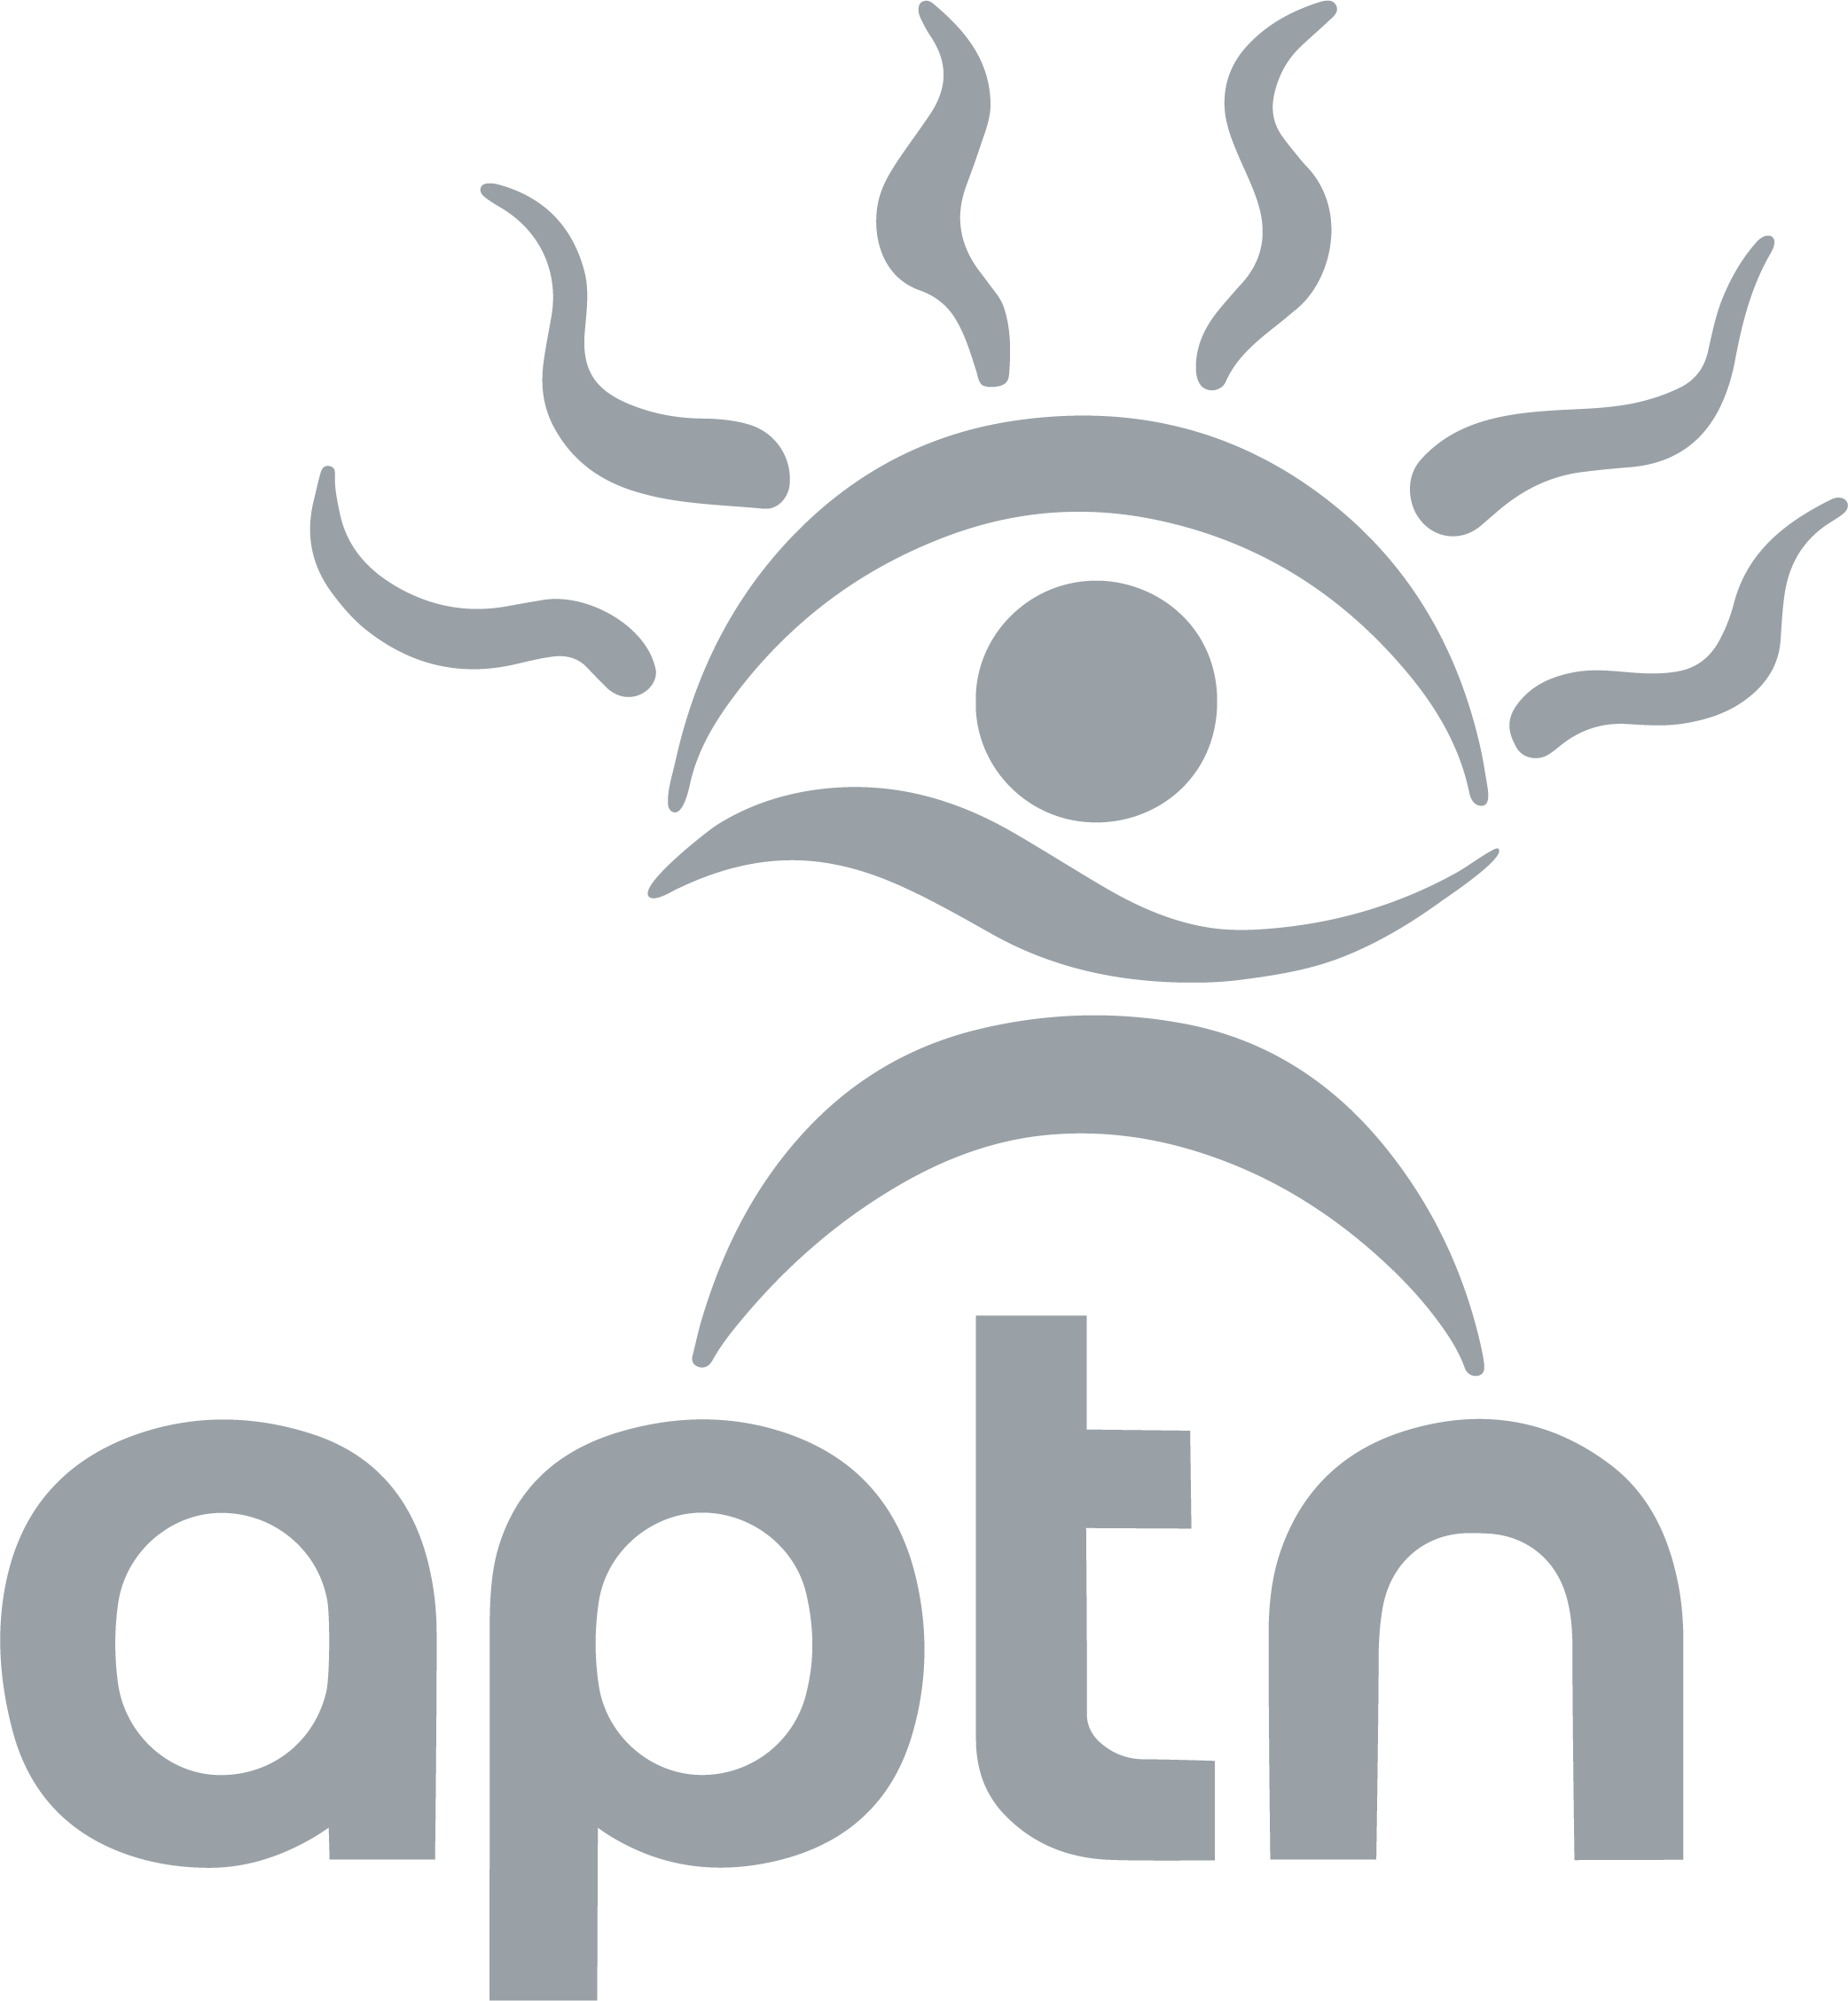 aptn-logo.png